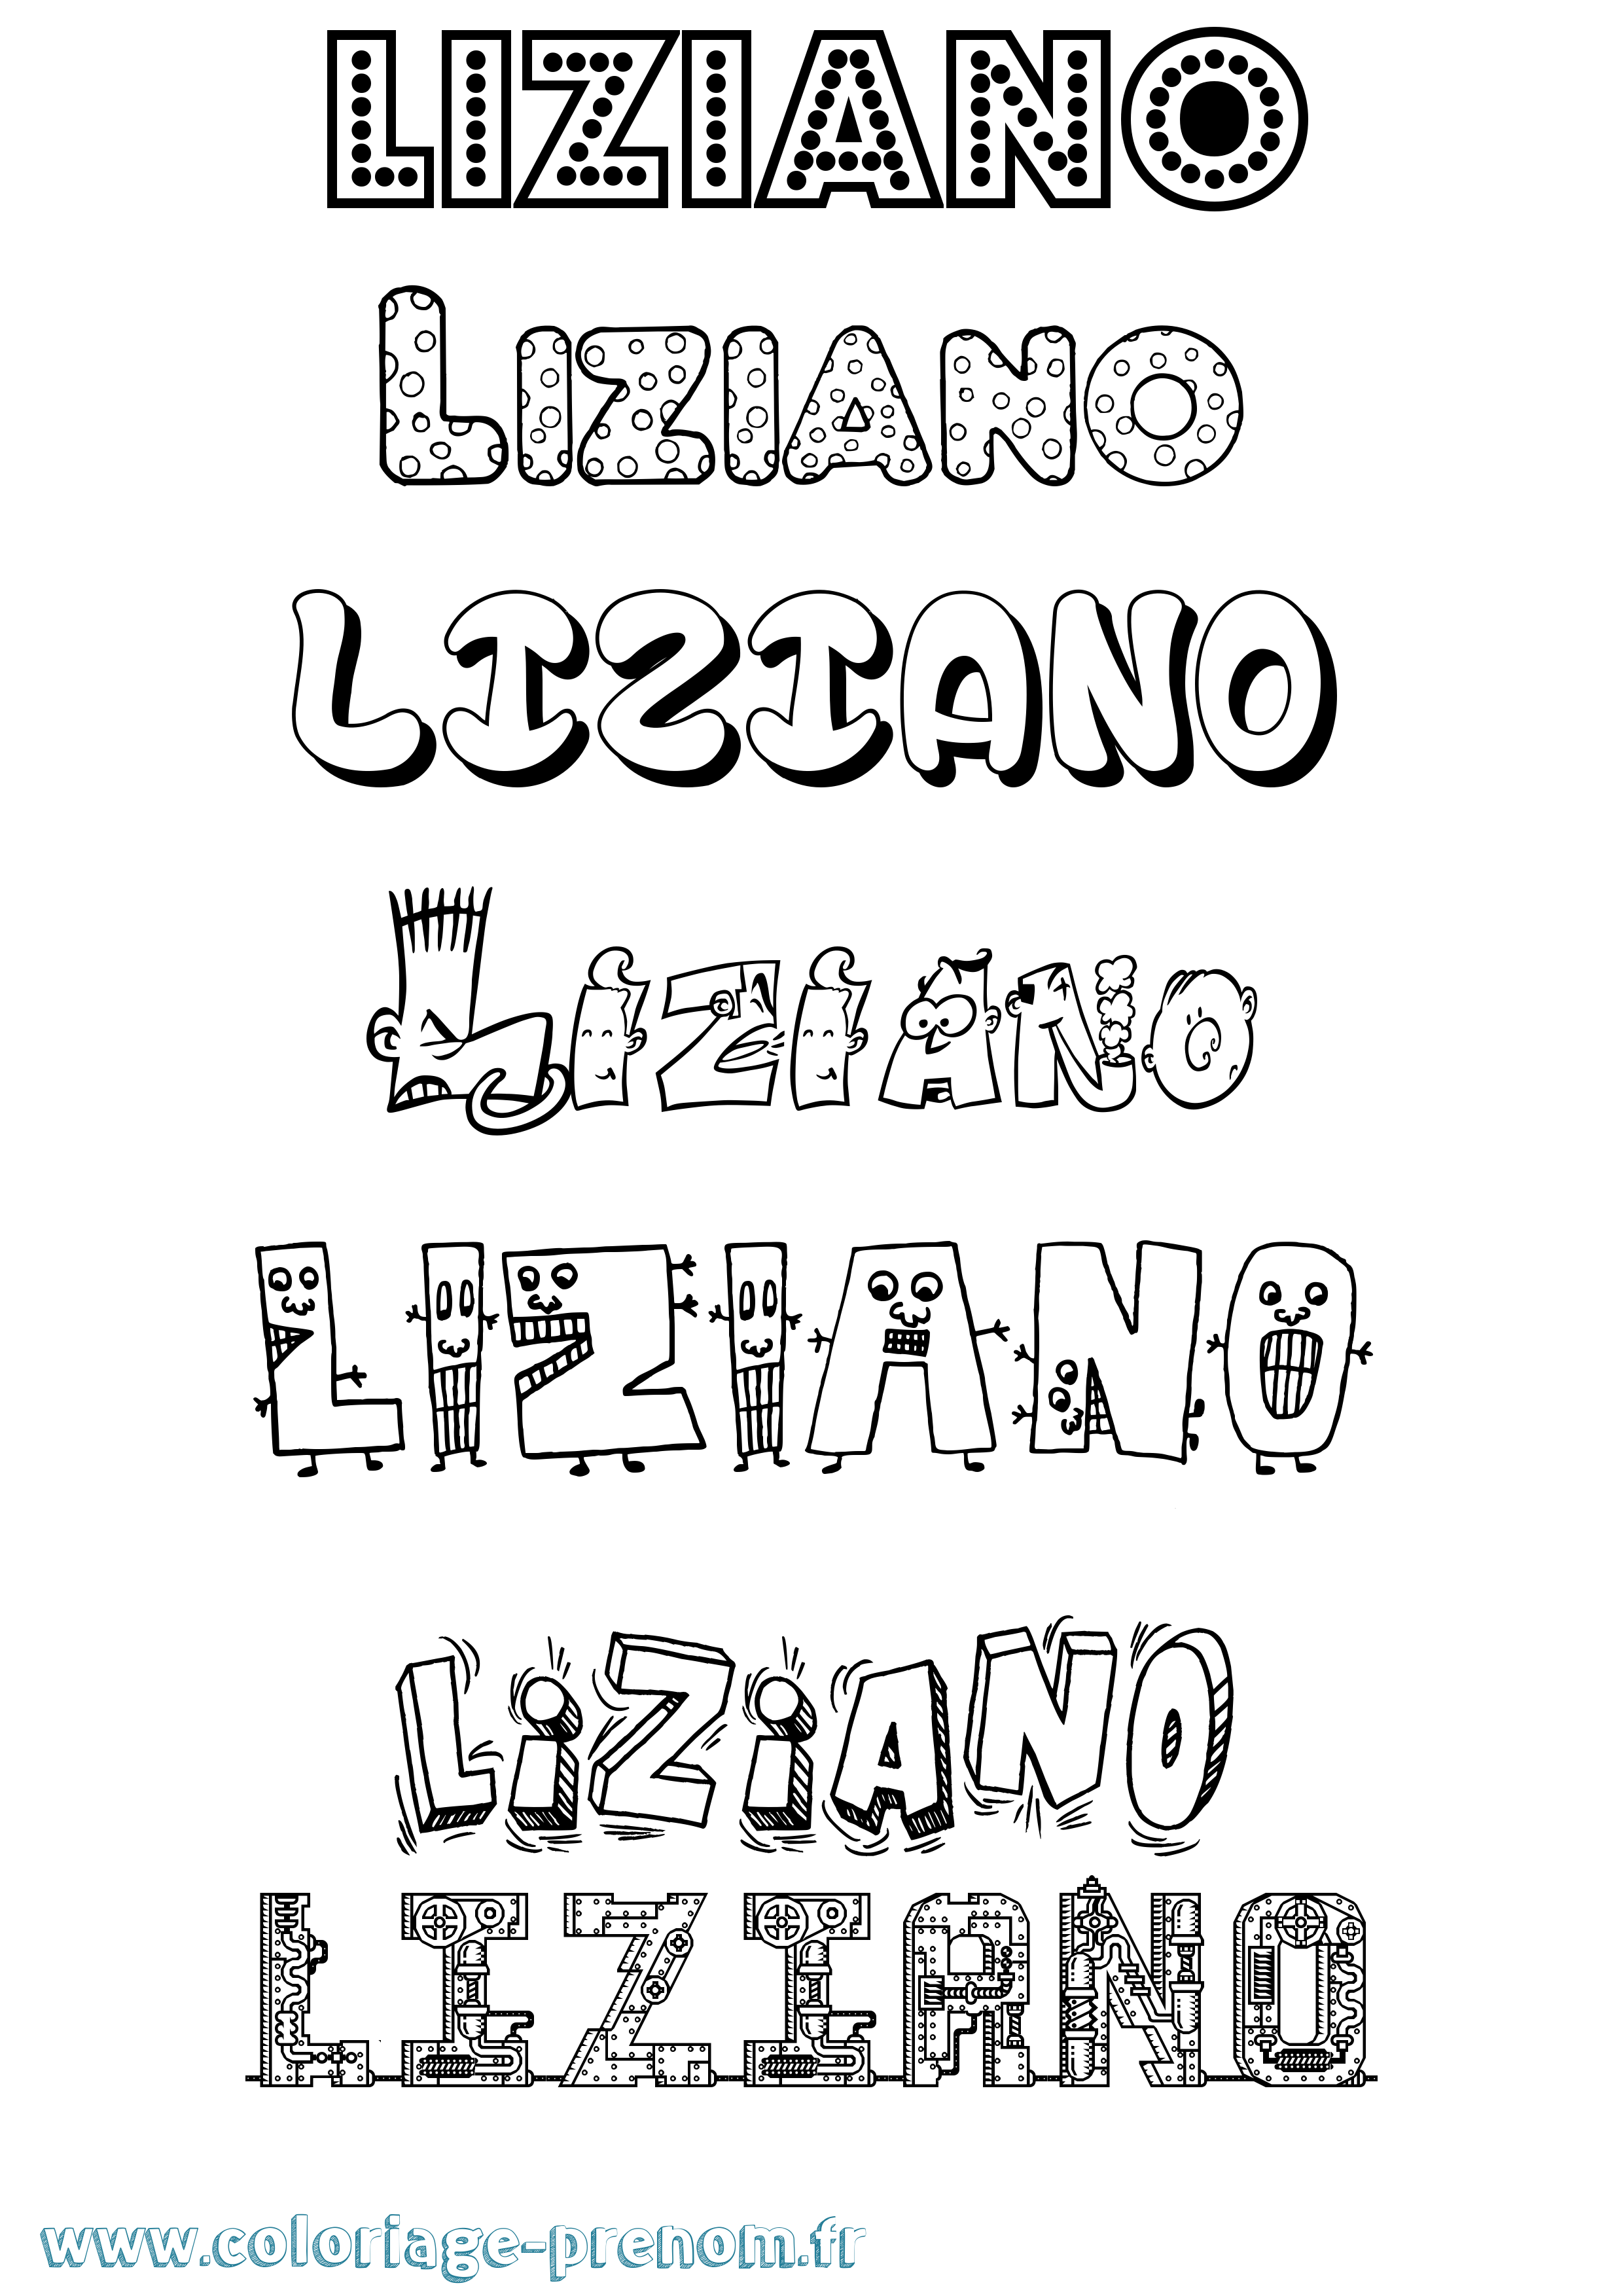 Coloriage prénom Liziano Fun